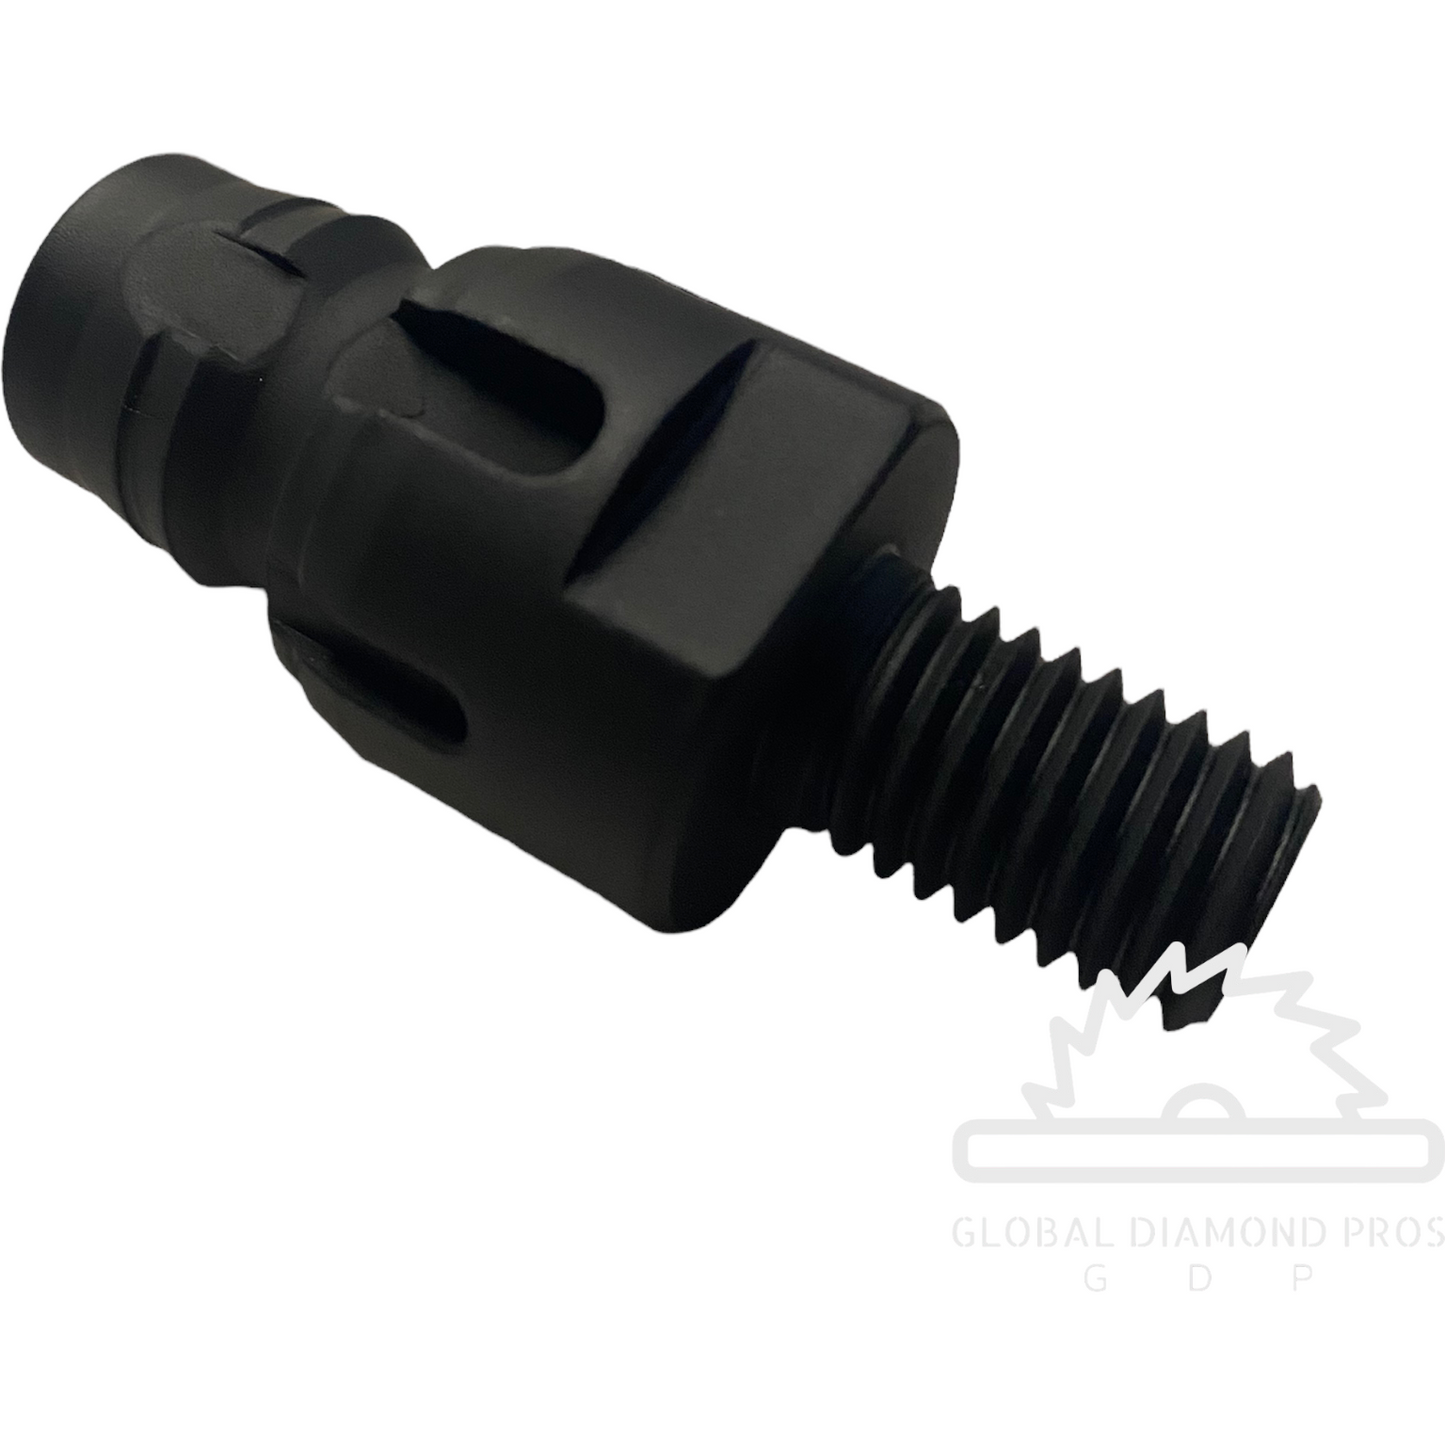 Hilti Core Drill Adapter-Quick Disconnect 5/8”-11 Male Thread to Hilti 6 Keyholes